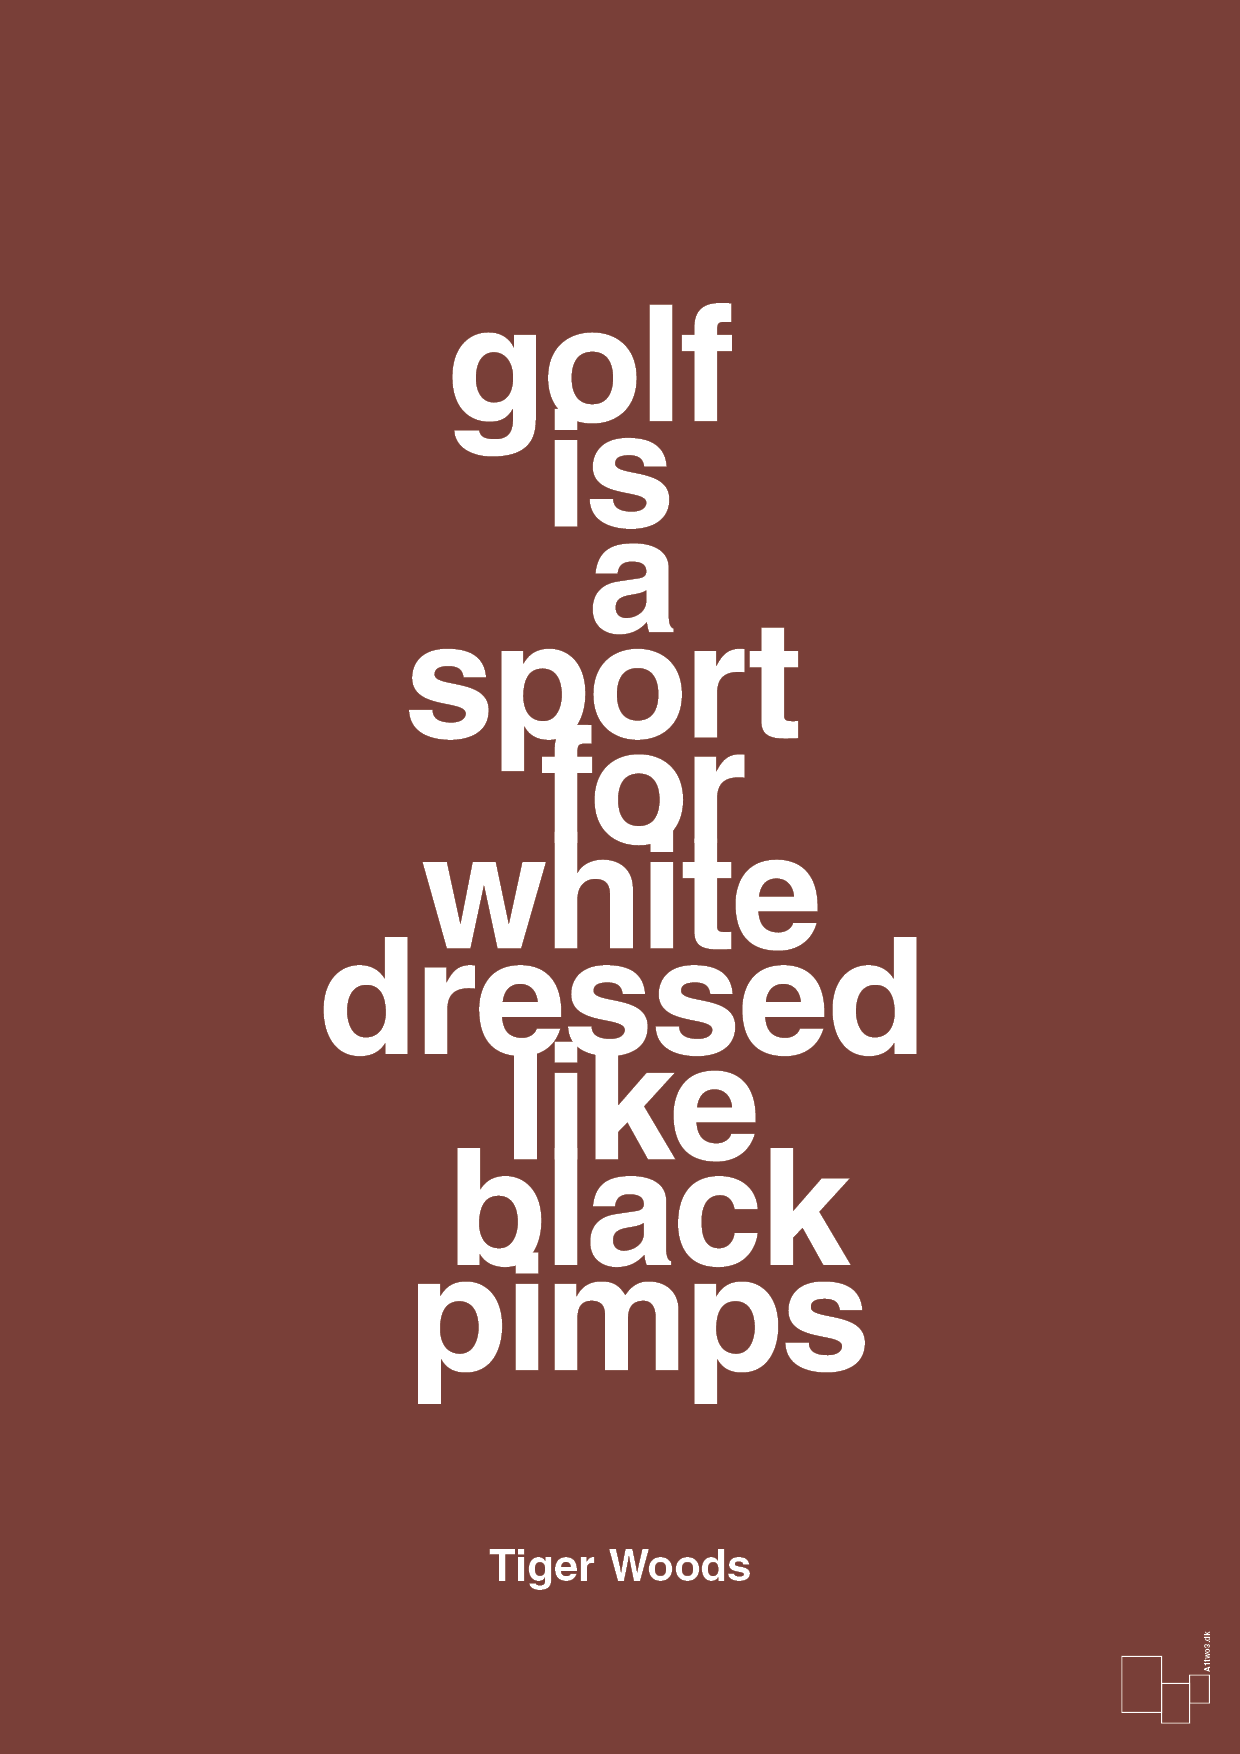 golf is a sport for white men dressed like black pimps - Plakat med Citater i Red Pepper